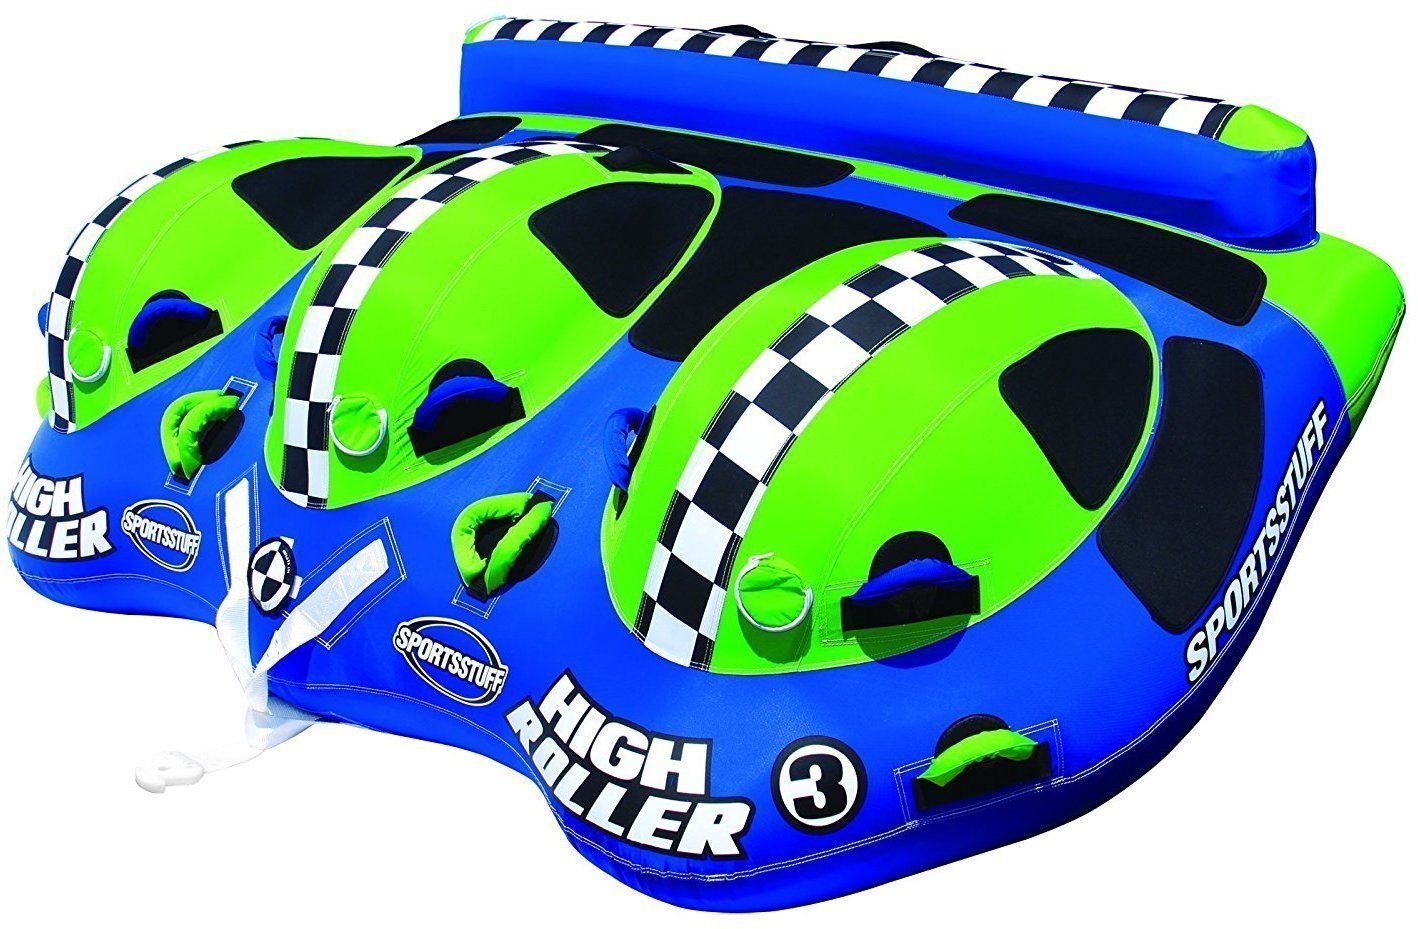 Aufblasbare Ringe / Bananen / Boote Sportsstuff Towable High Roller 3 Personen Blue/Green